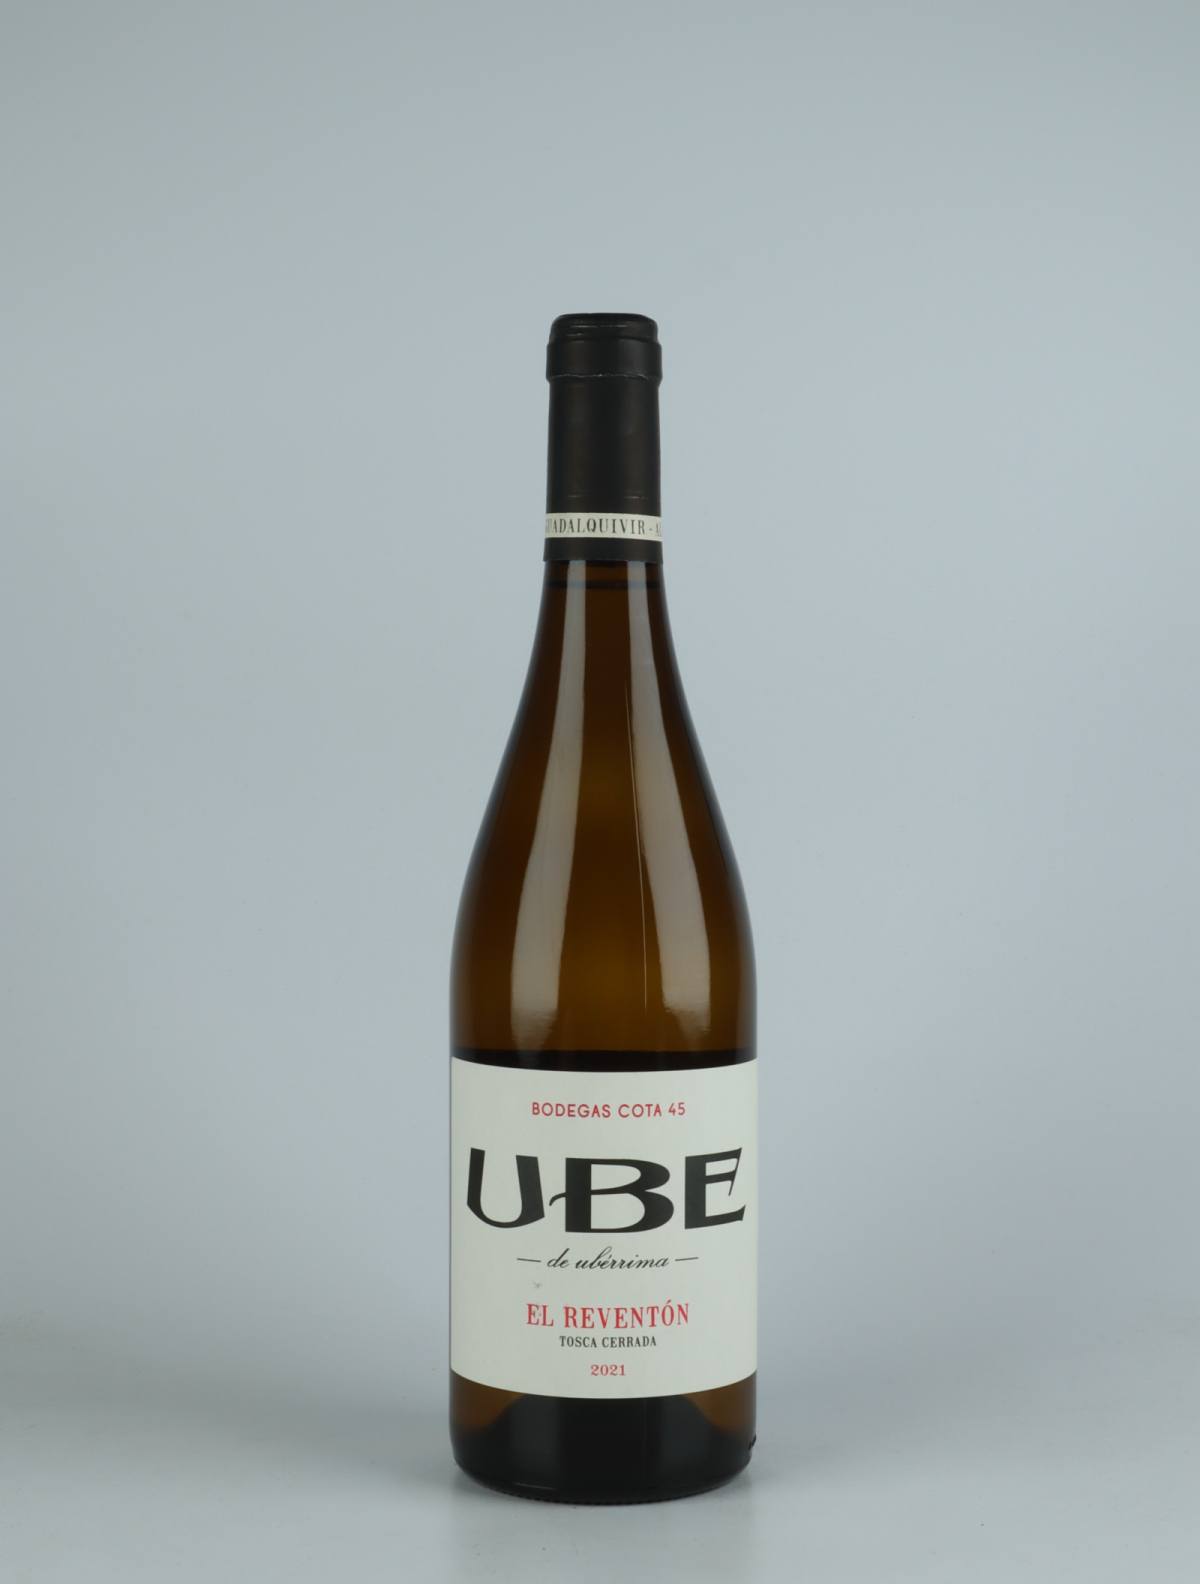 A bottle 2021 UBE El Reventón White wine from Bodegas Cota 45, Andalucia in Spain